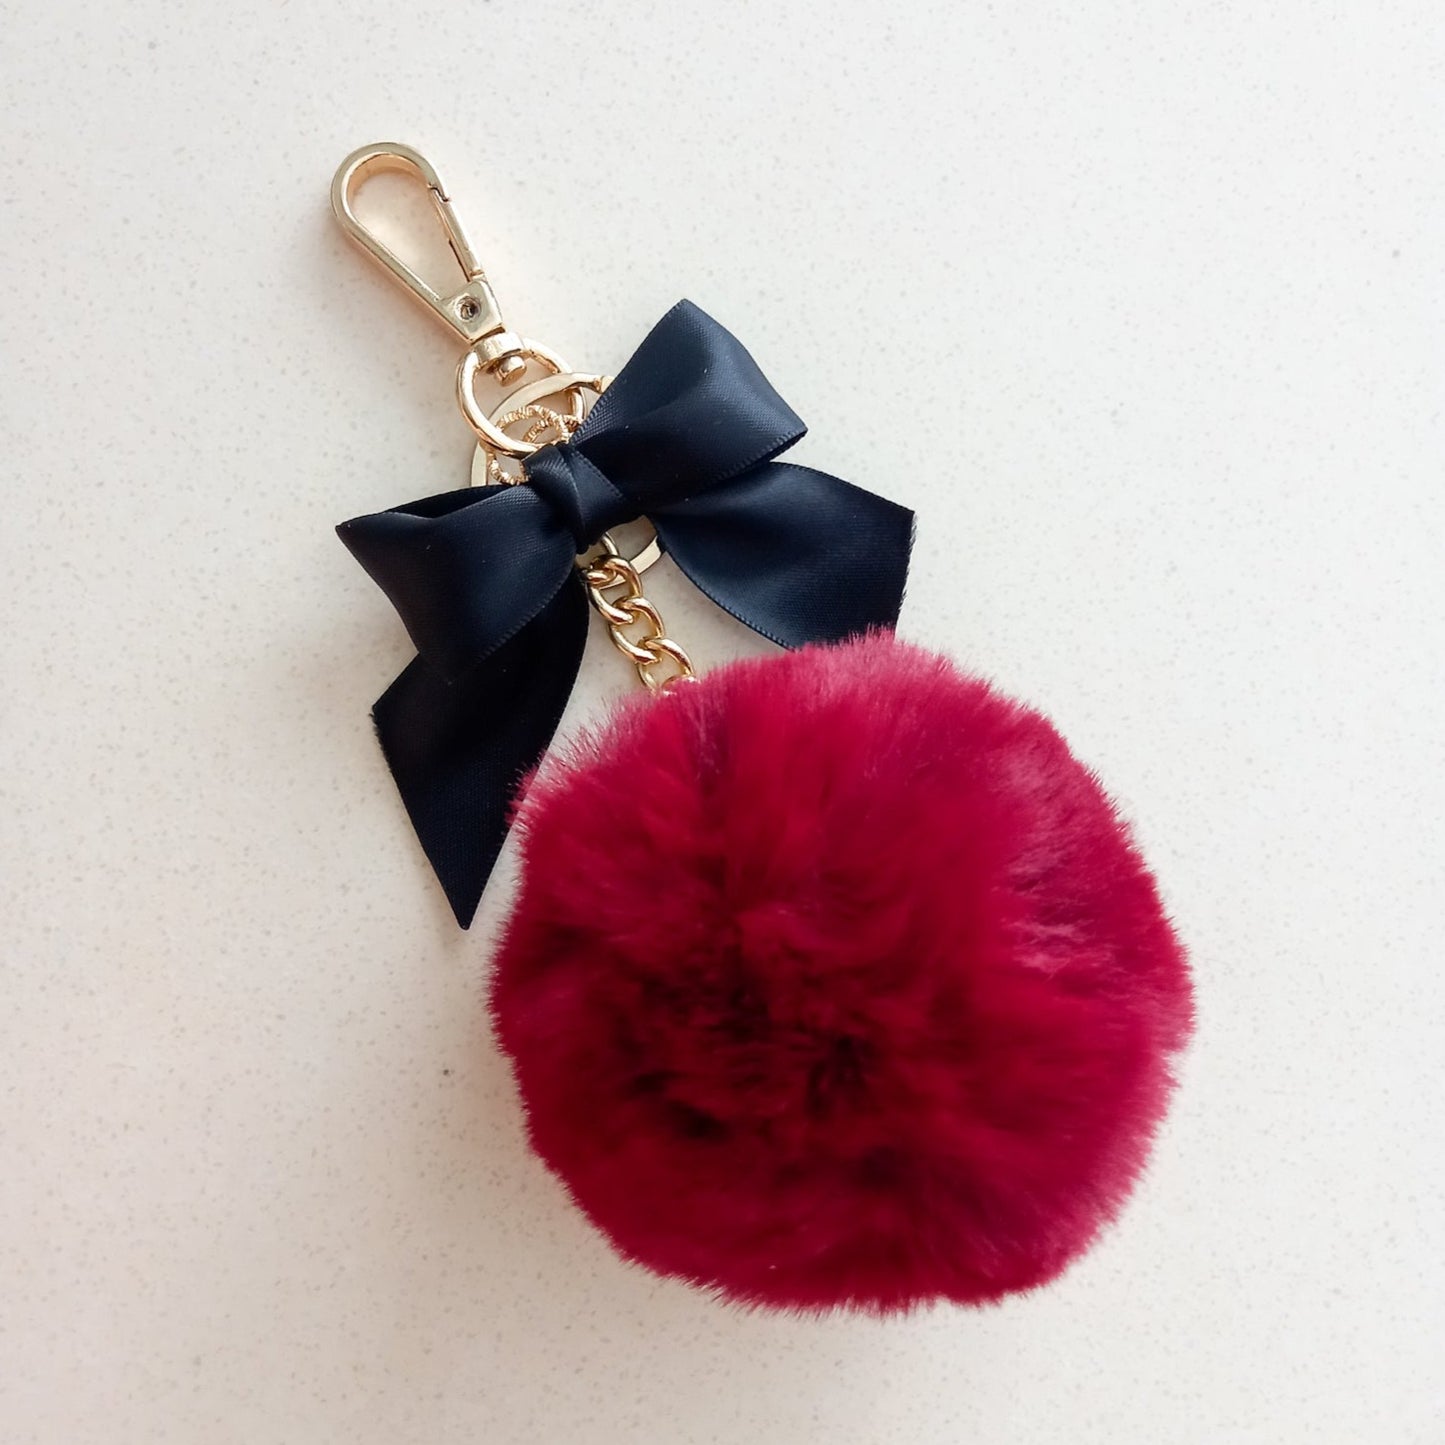 Curatelier Cassie Faux Fur Maroon Pom Pom Powder Puff Ball With Black Satin Ribbon Key Ring Bag Charm